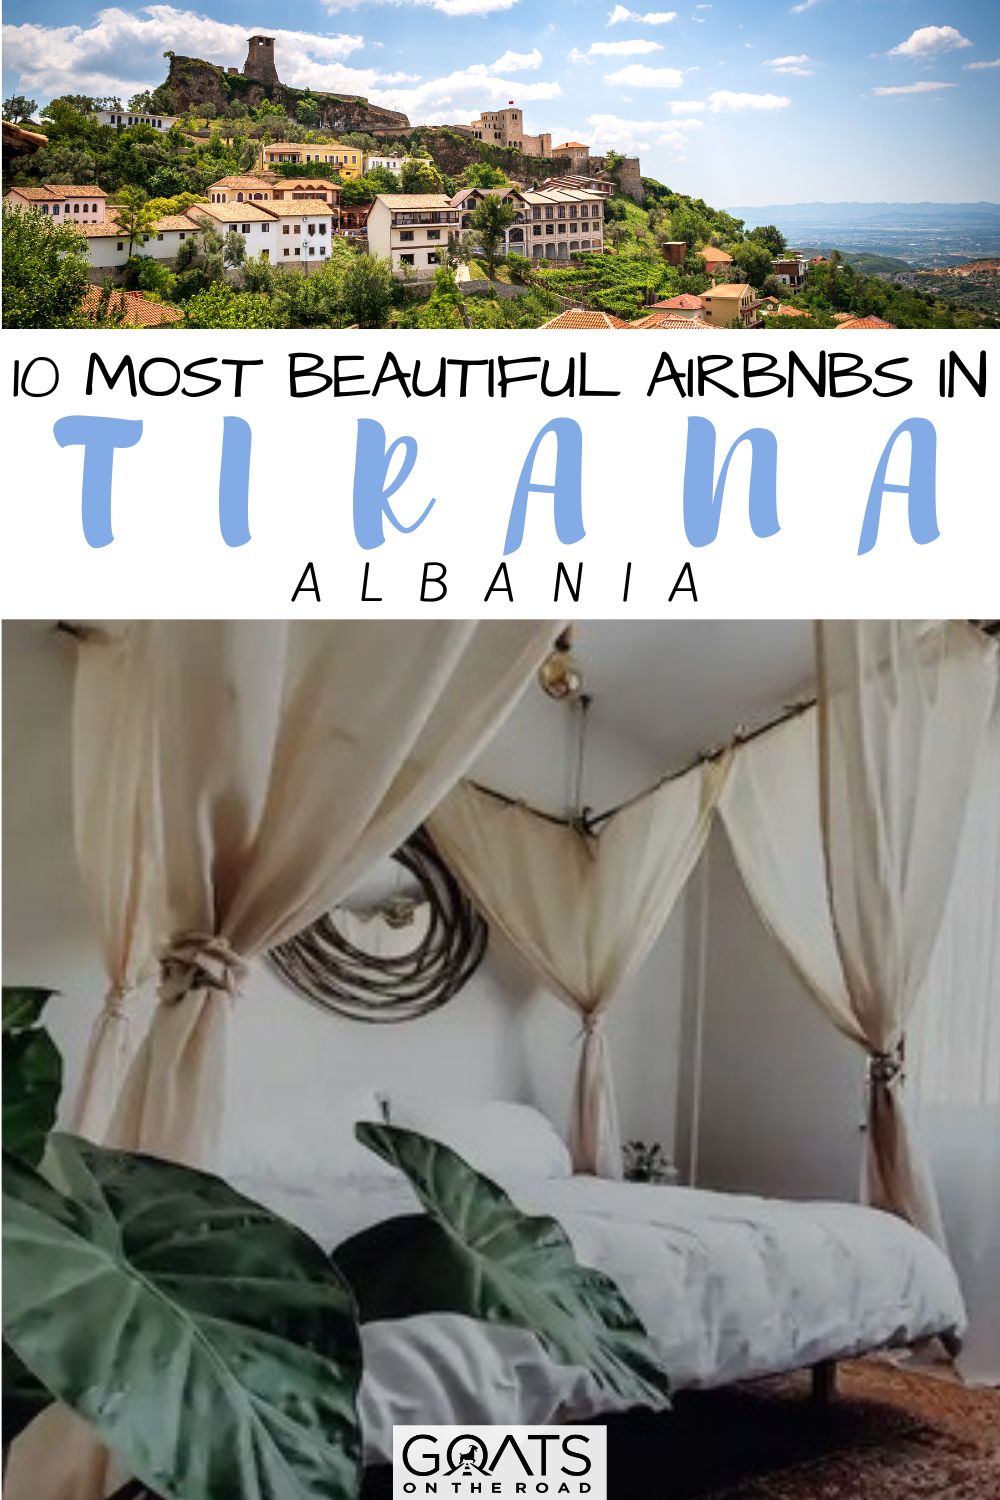 “10 Most Beautiful Airbnbs in Tirana, Albania